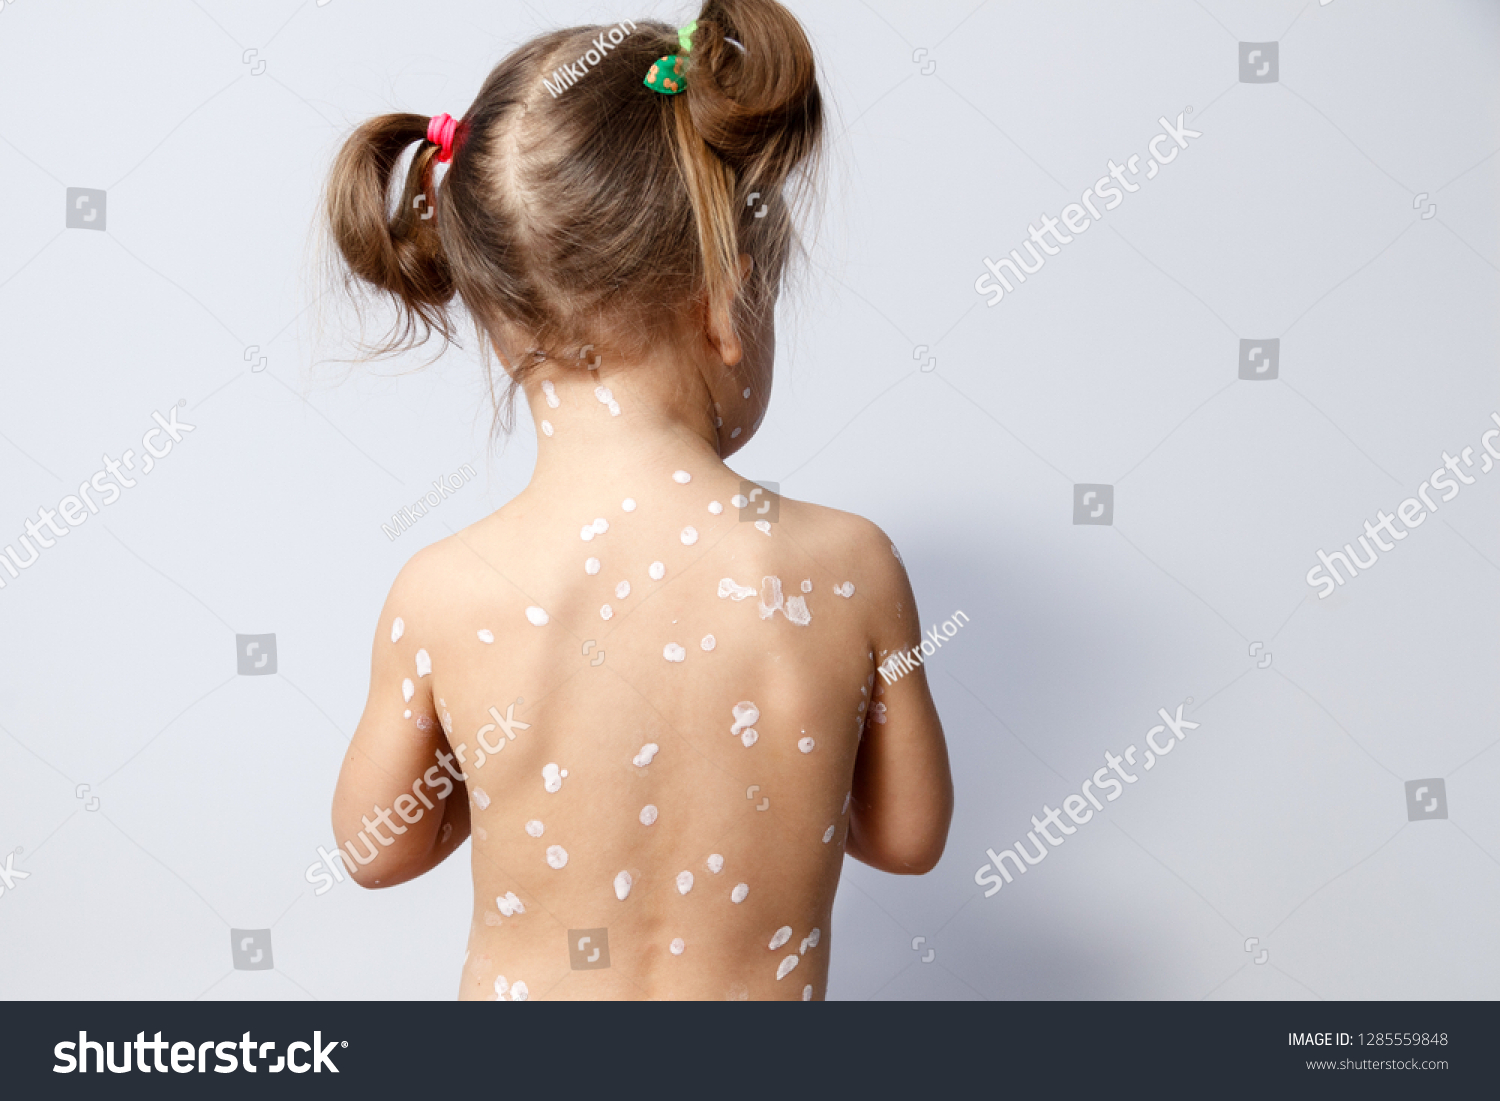  little girl chickenpox 